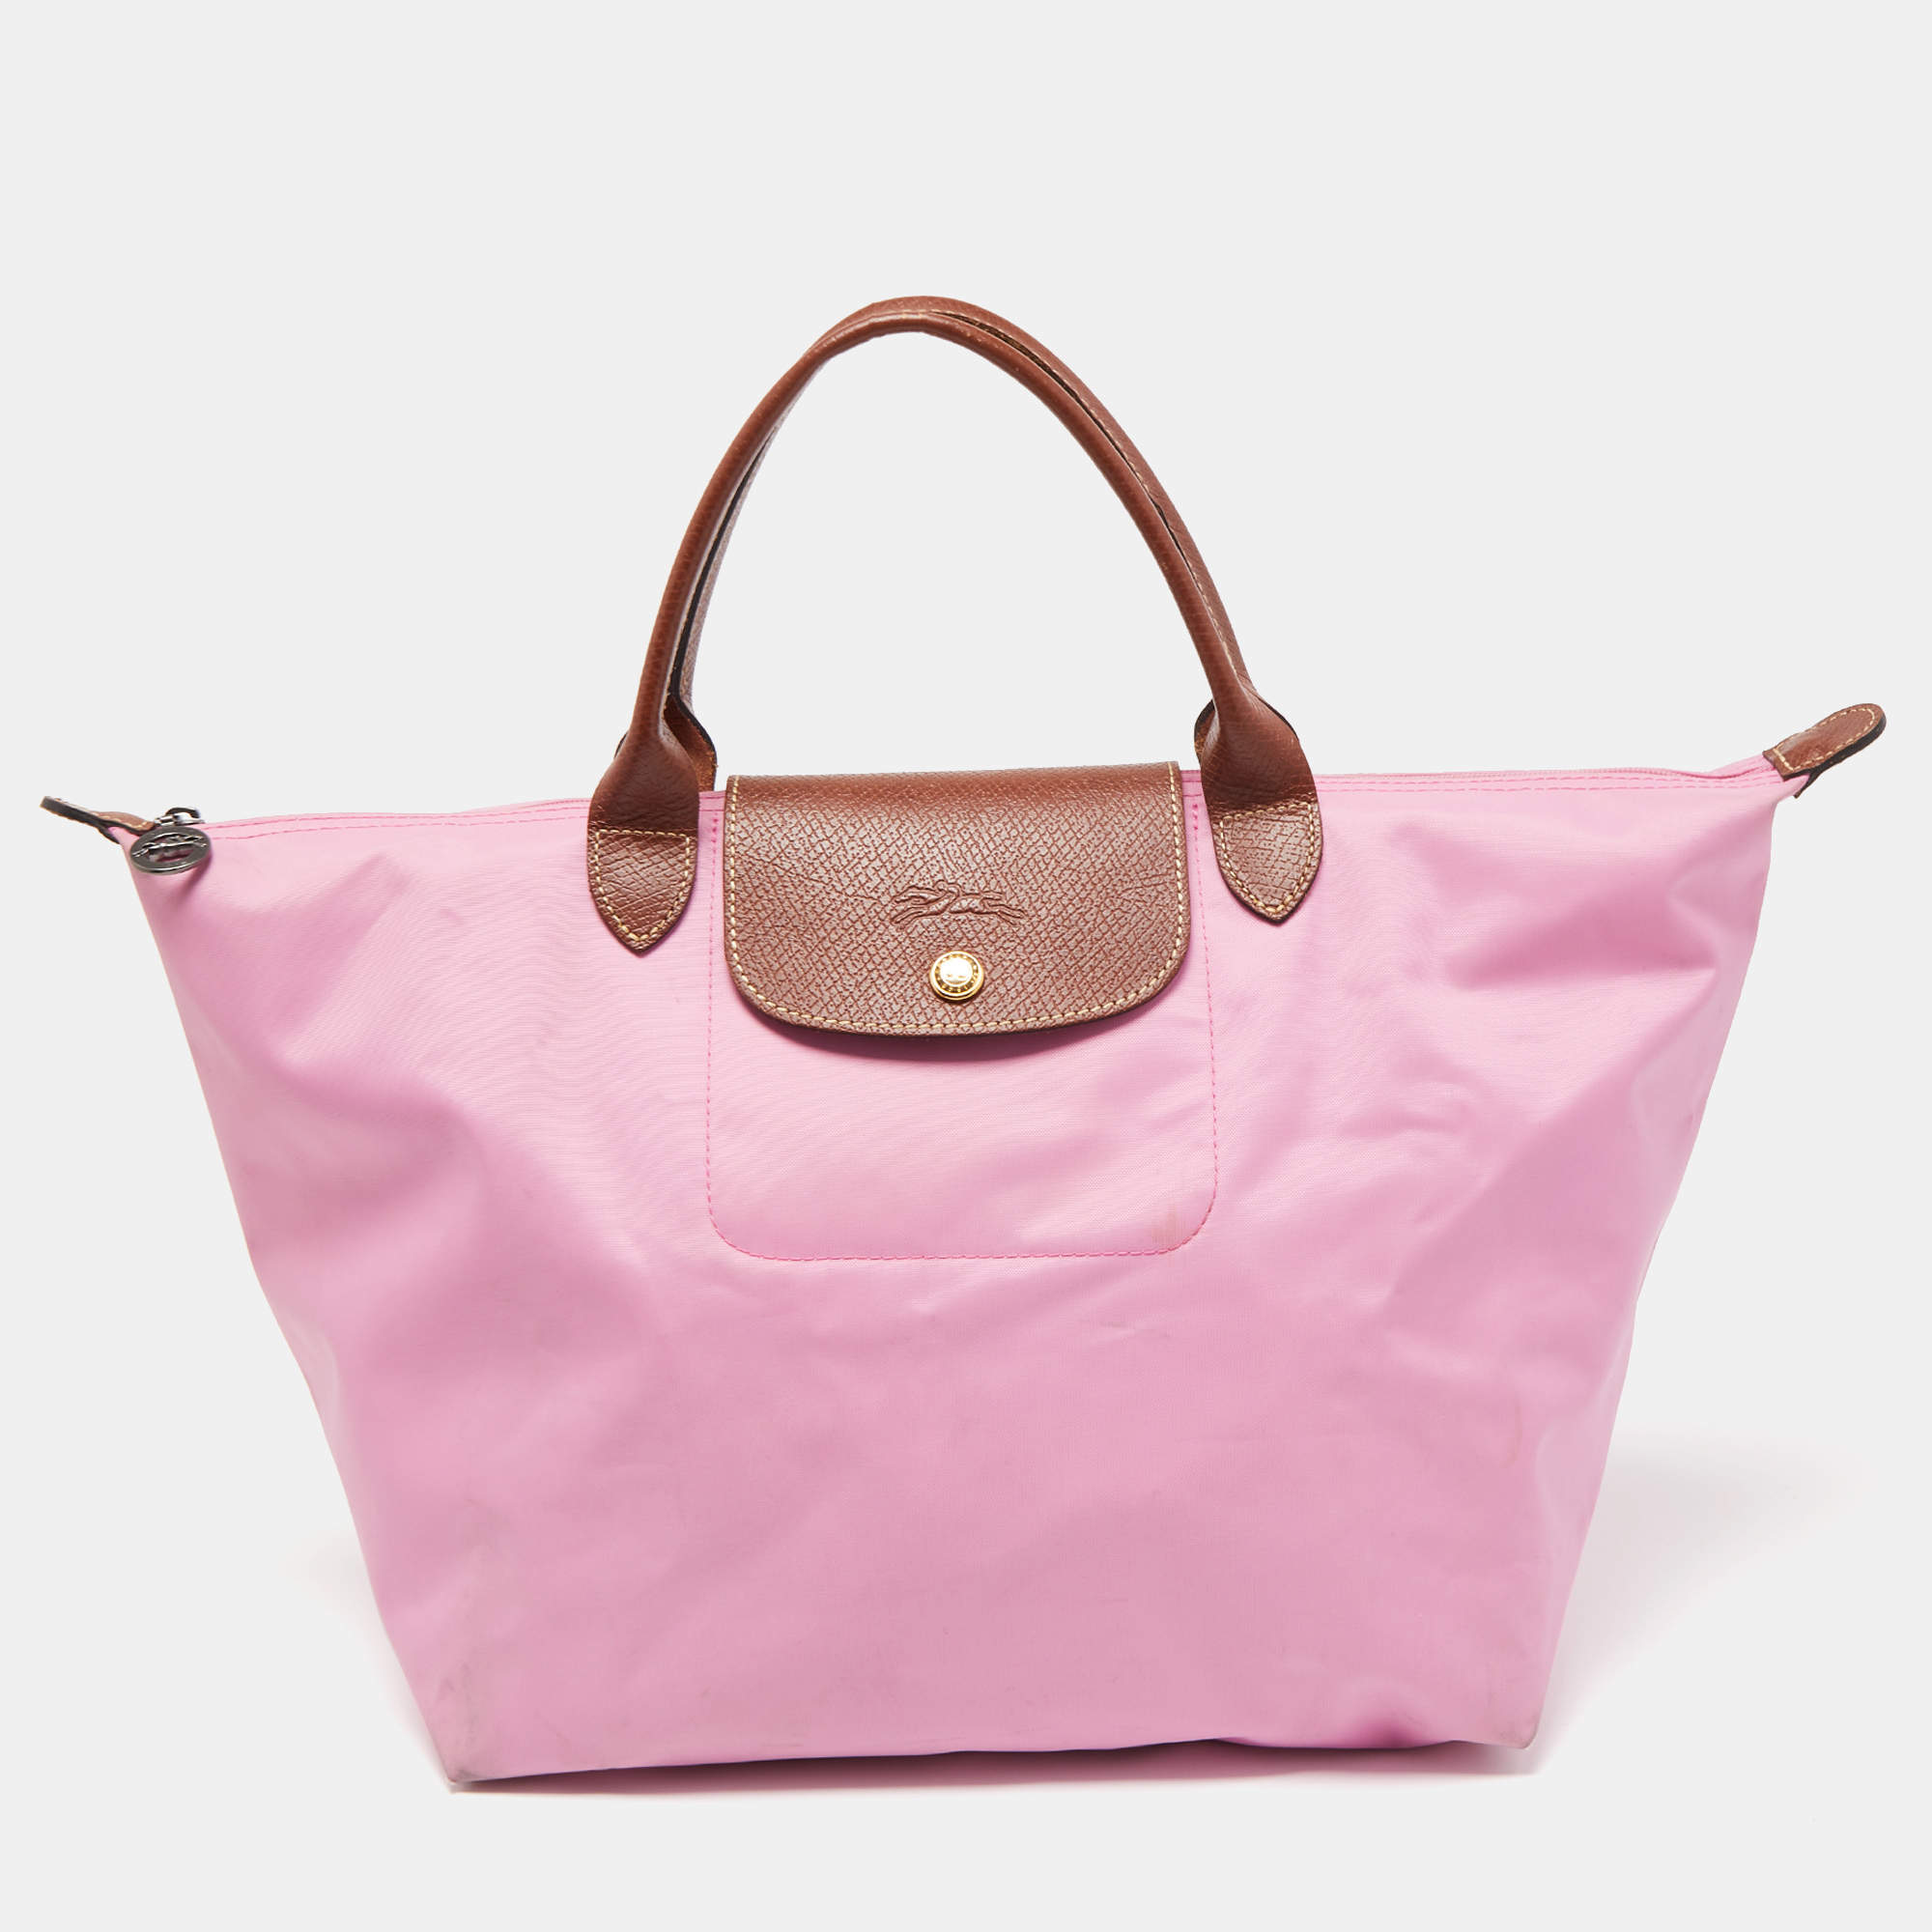 Longchamp Mini Pouch with handle women handbag Light Pink Color